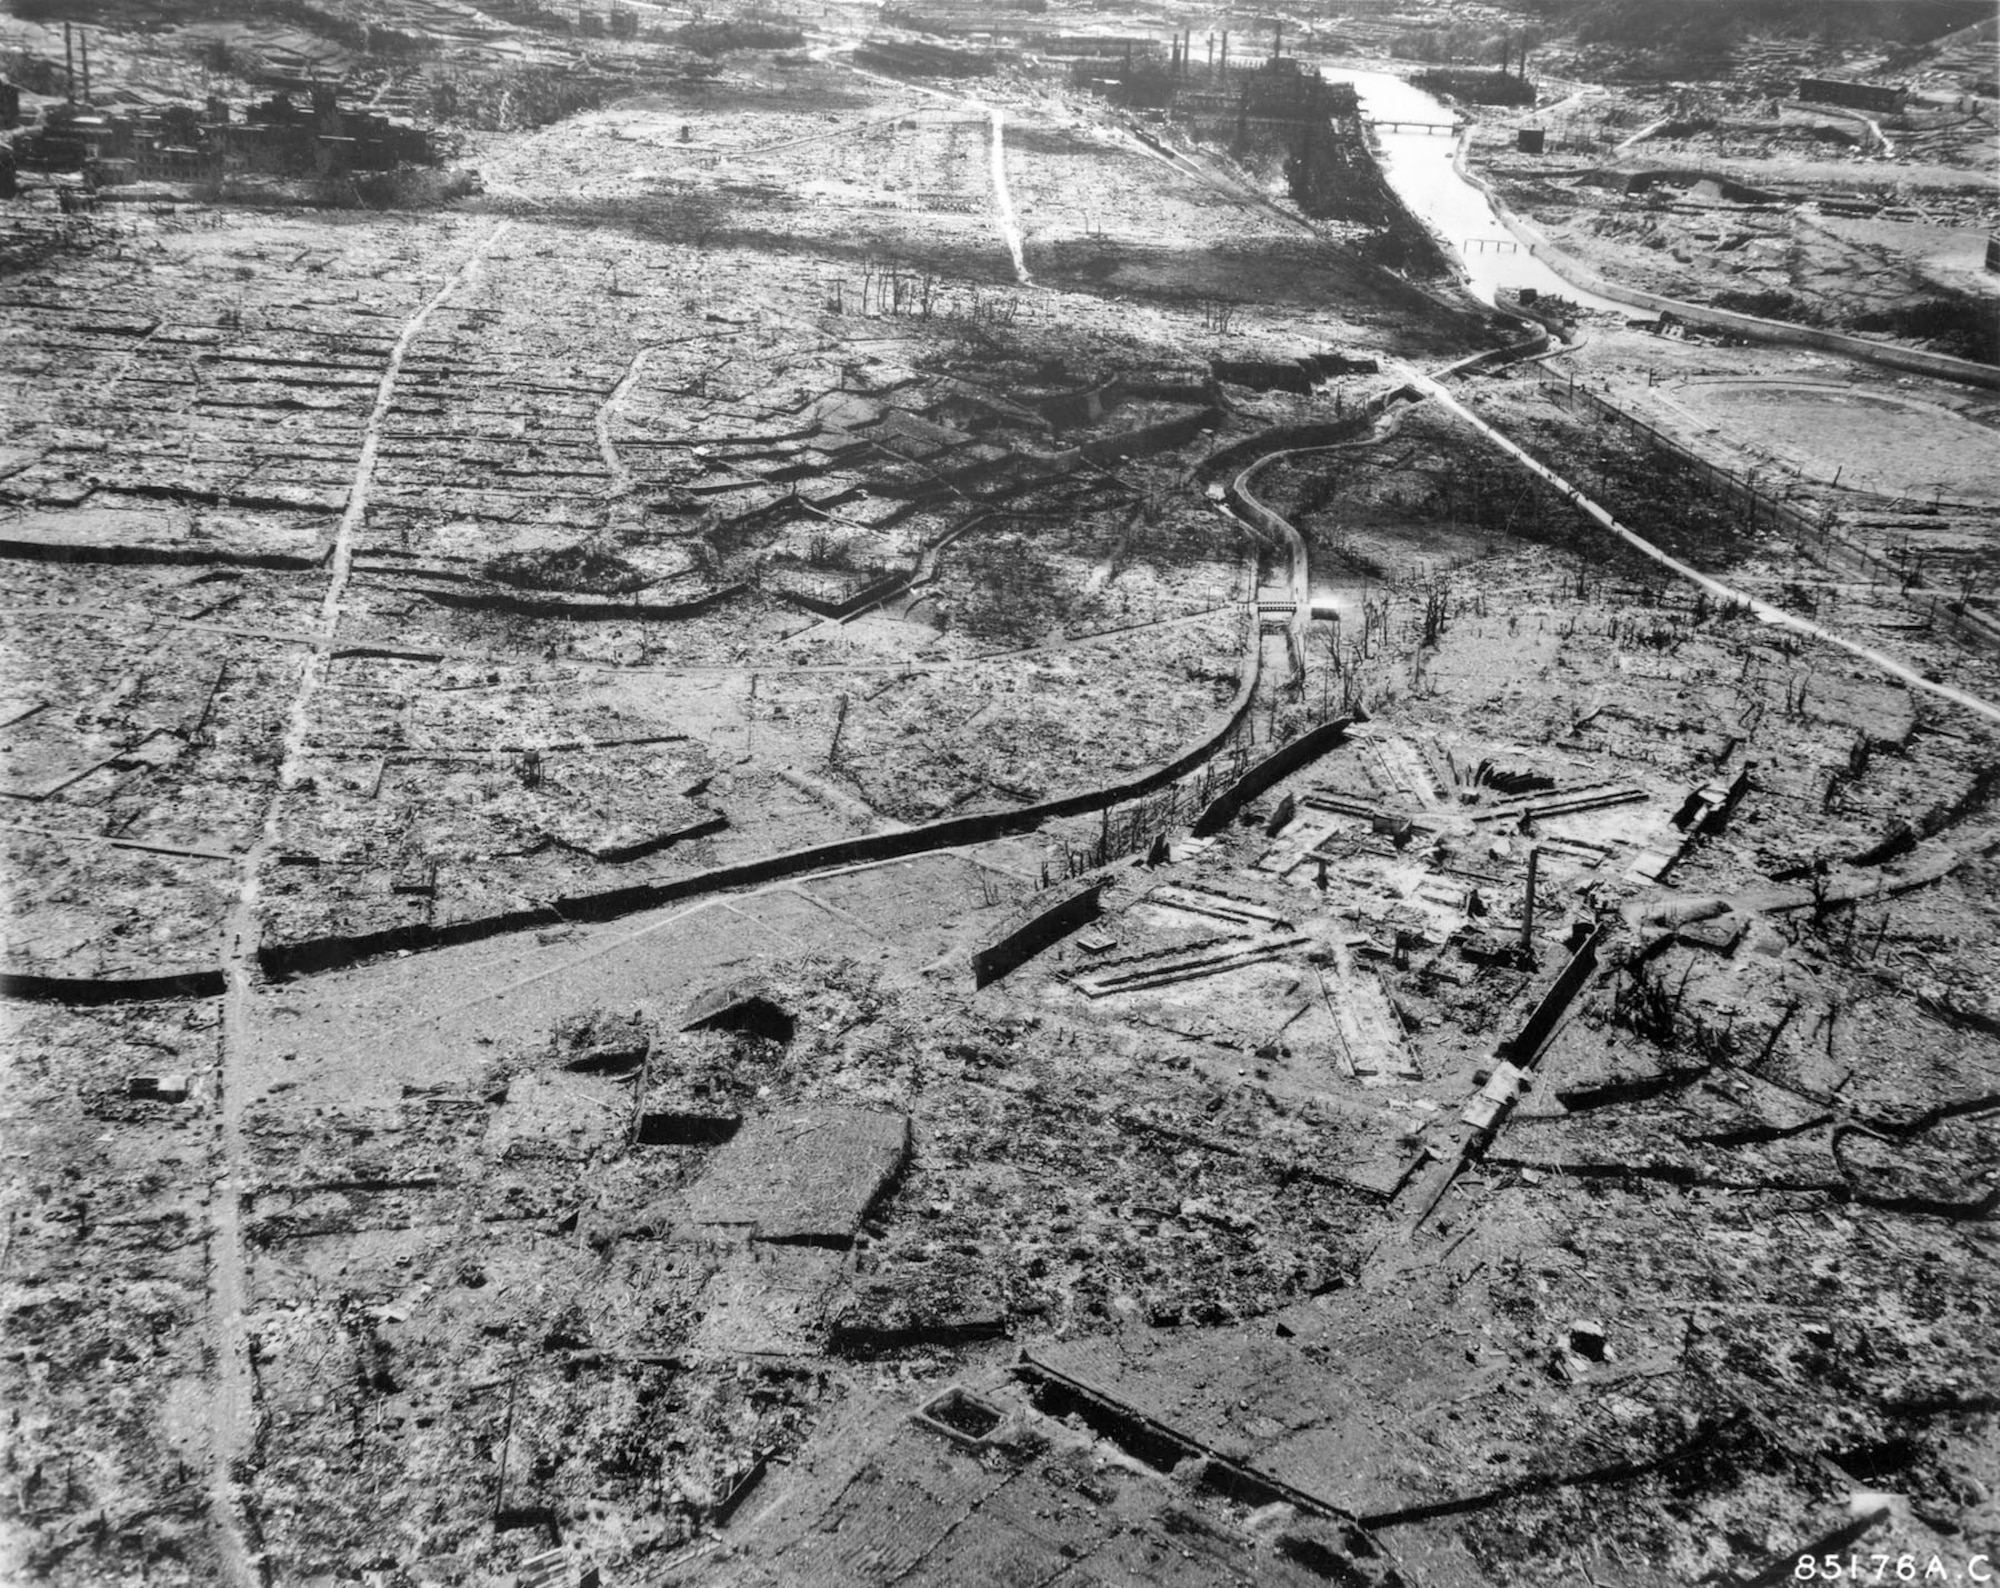 Atomic bomb damage at Nagasaki. (U.S. Air Force photo)